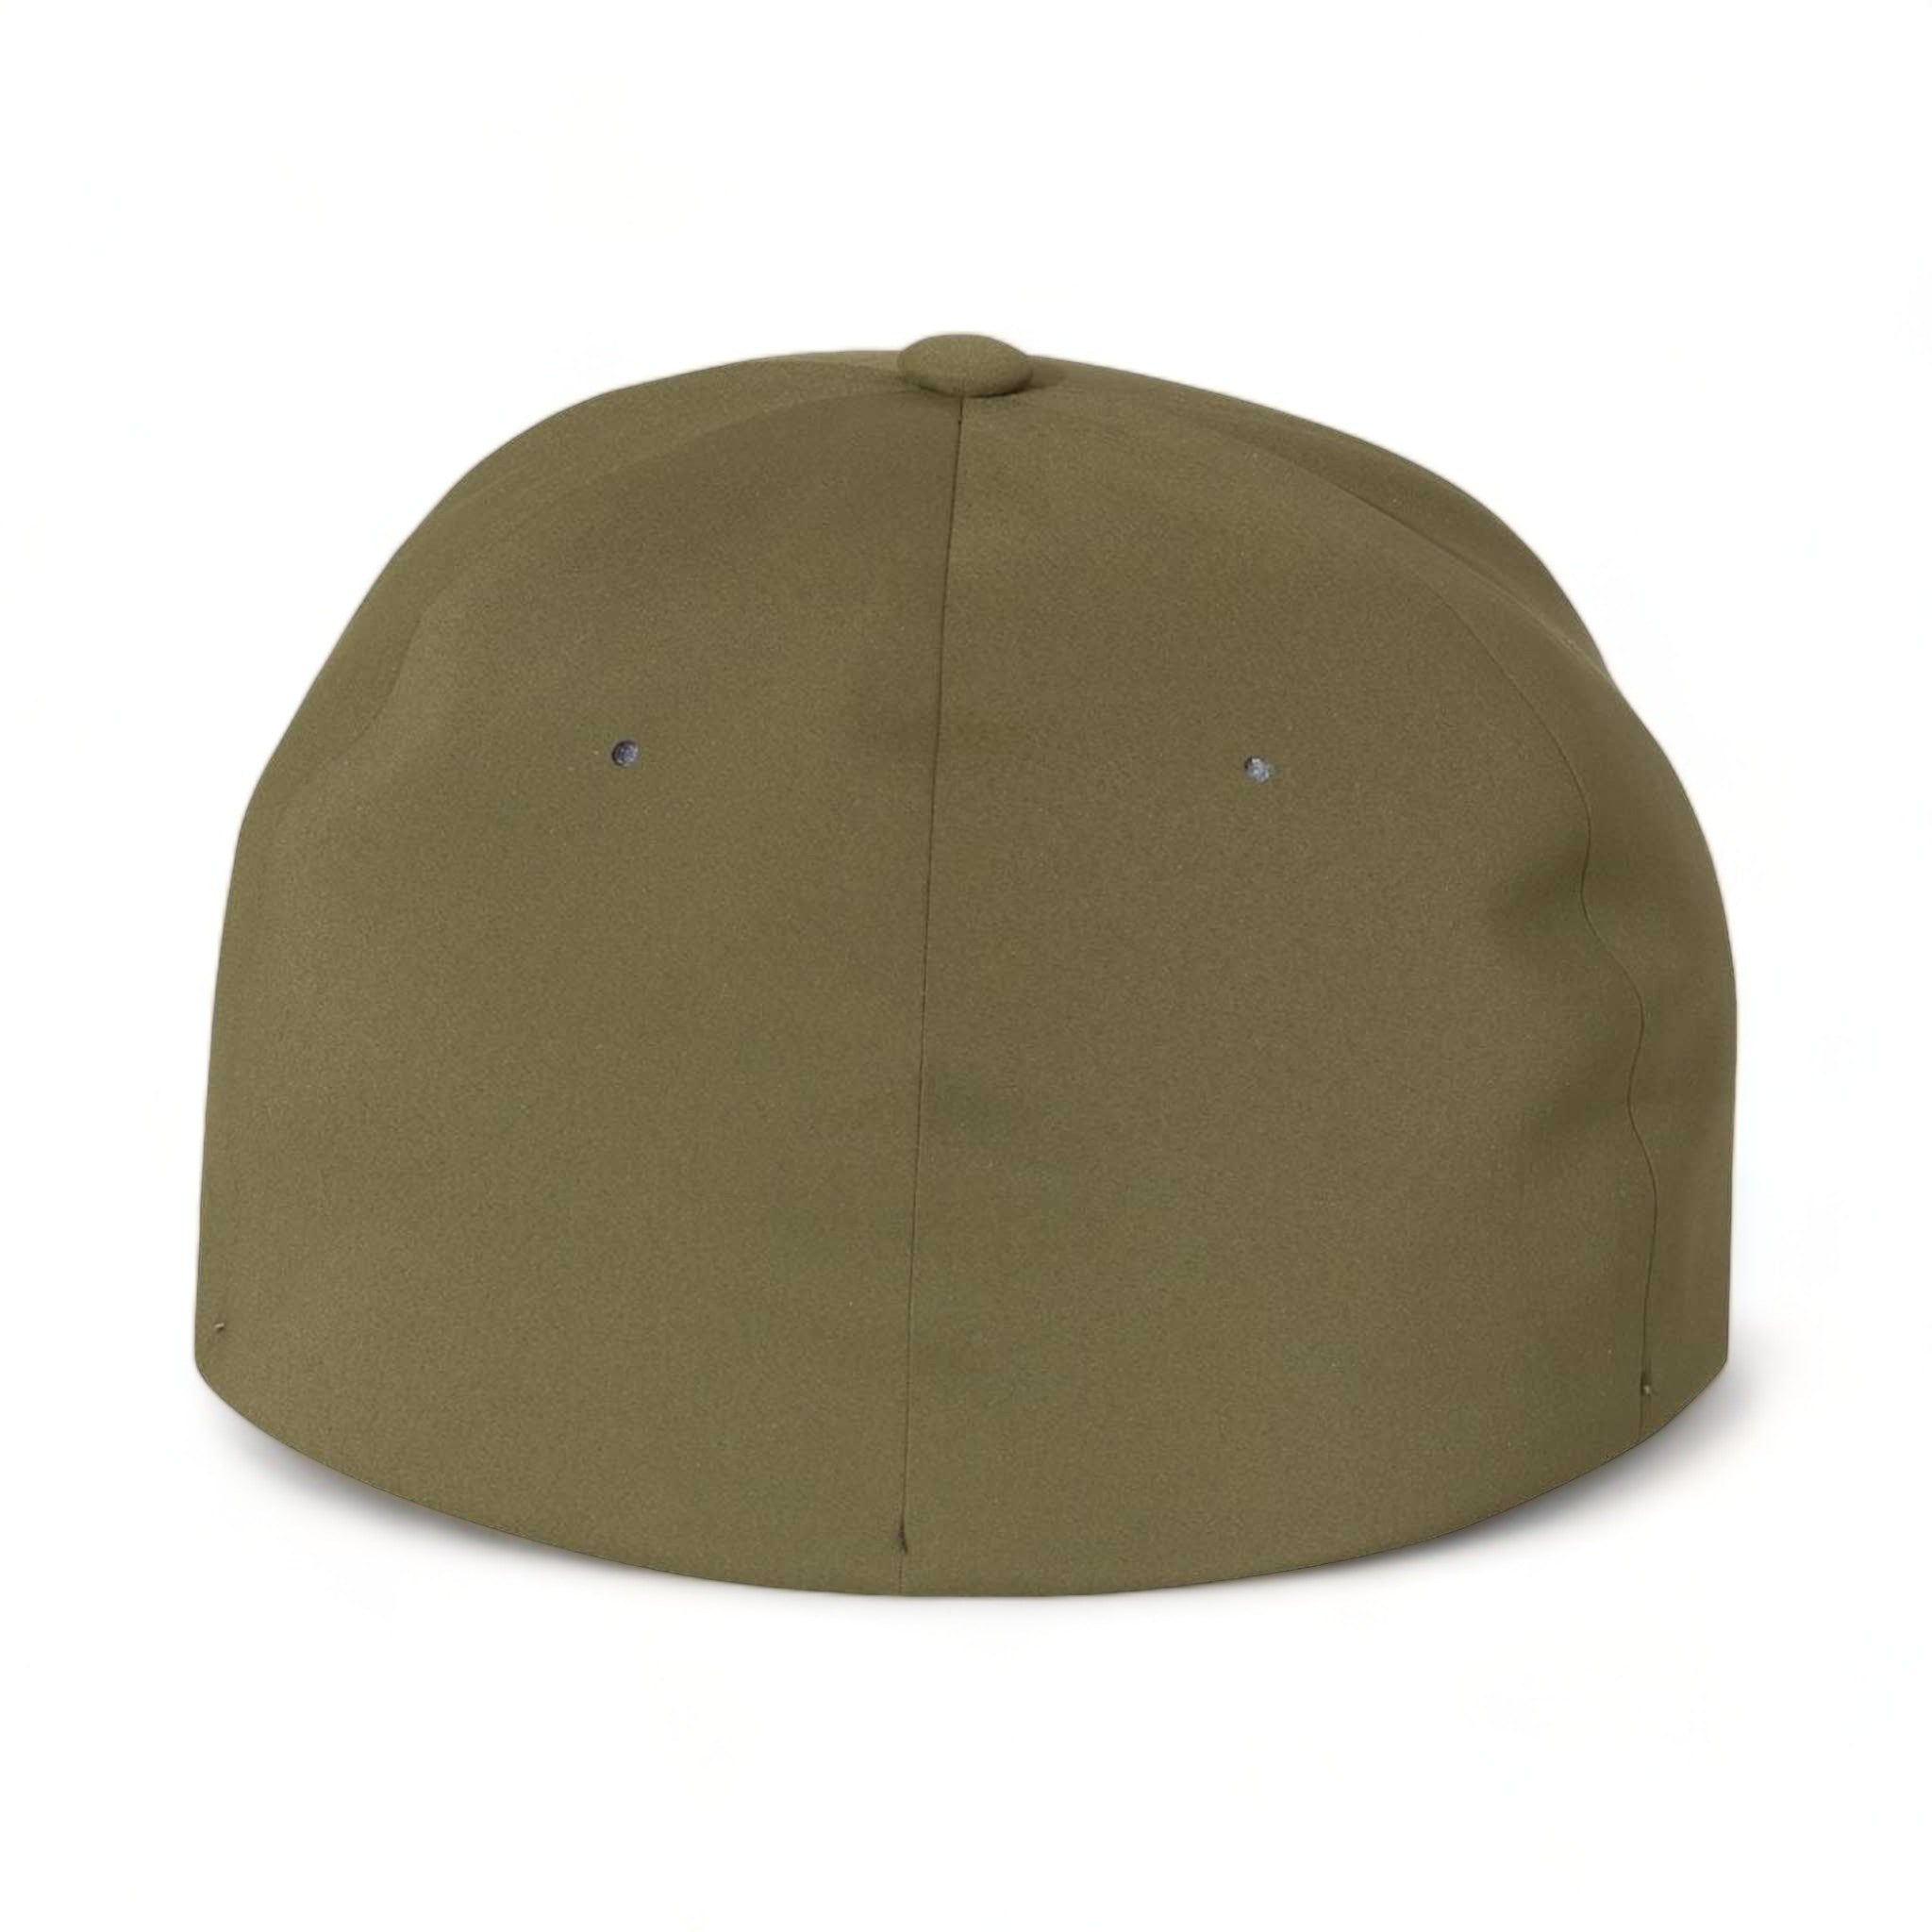 Back view of Flexfit 180 custom hat in olive